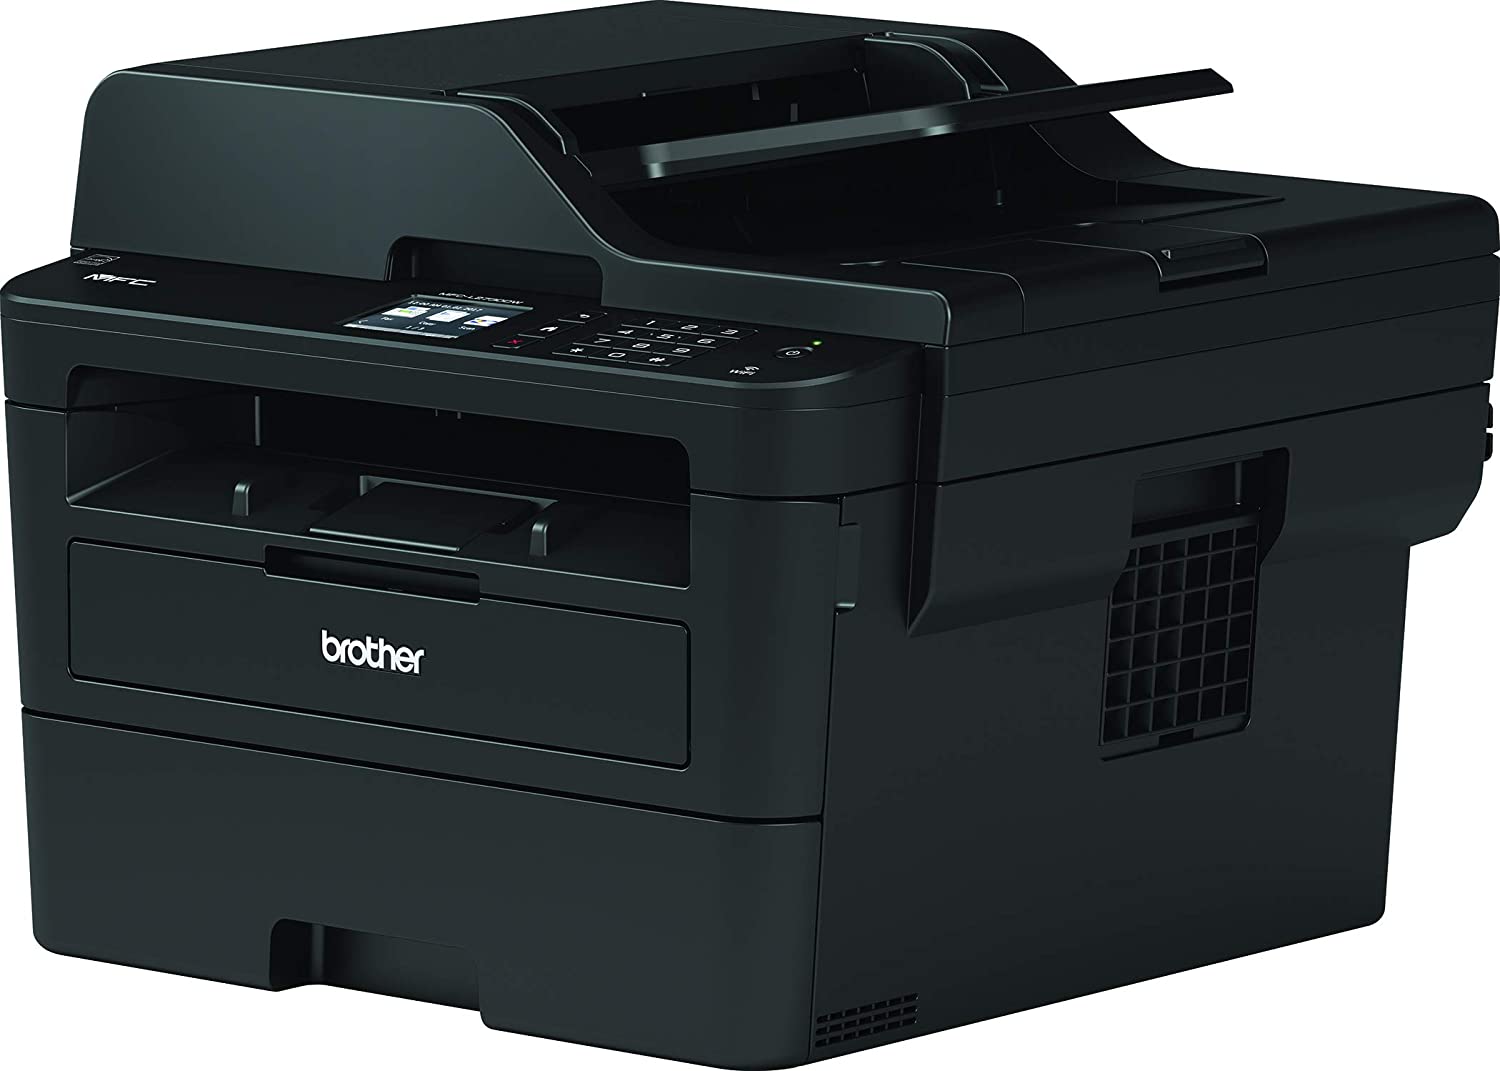 Brother MFC-L2730DW Multifunction Monochrome Laser Printer